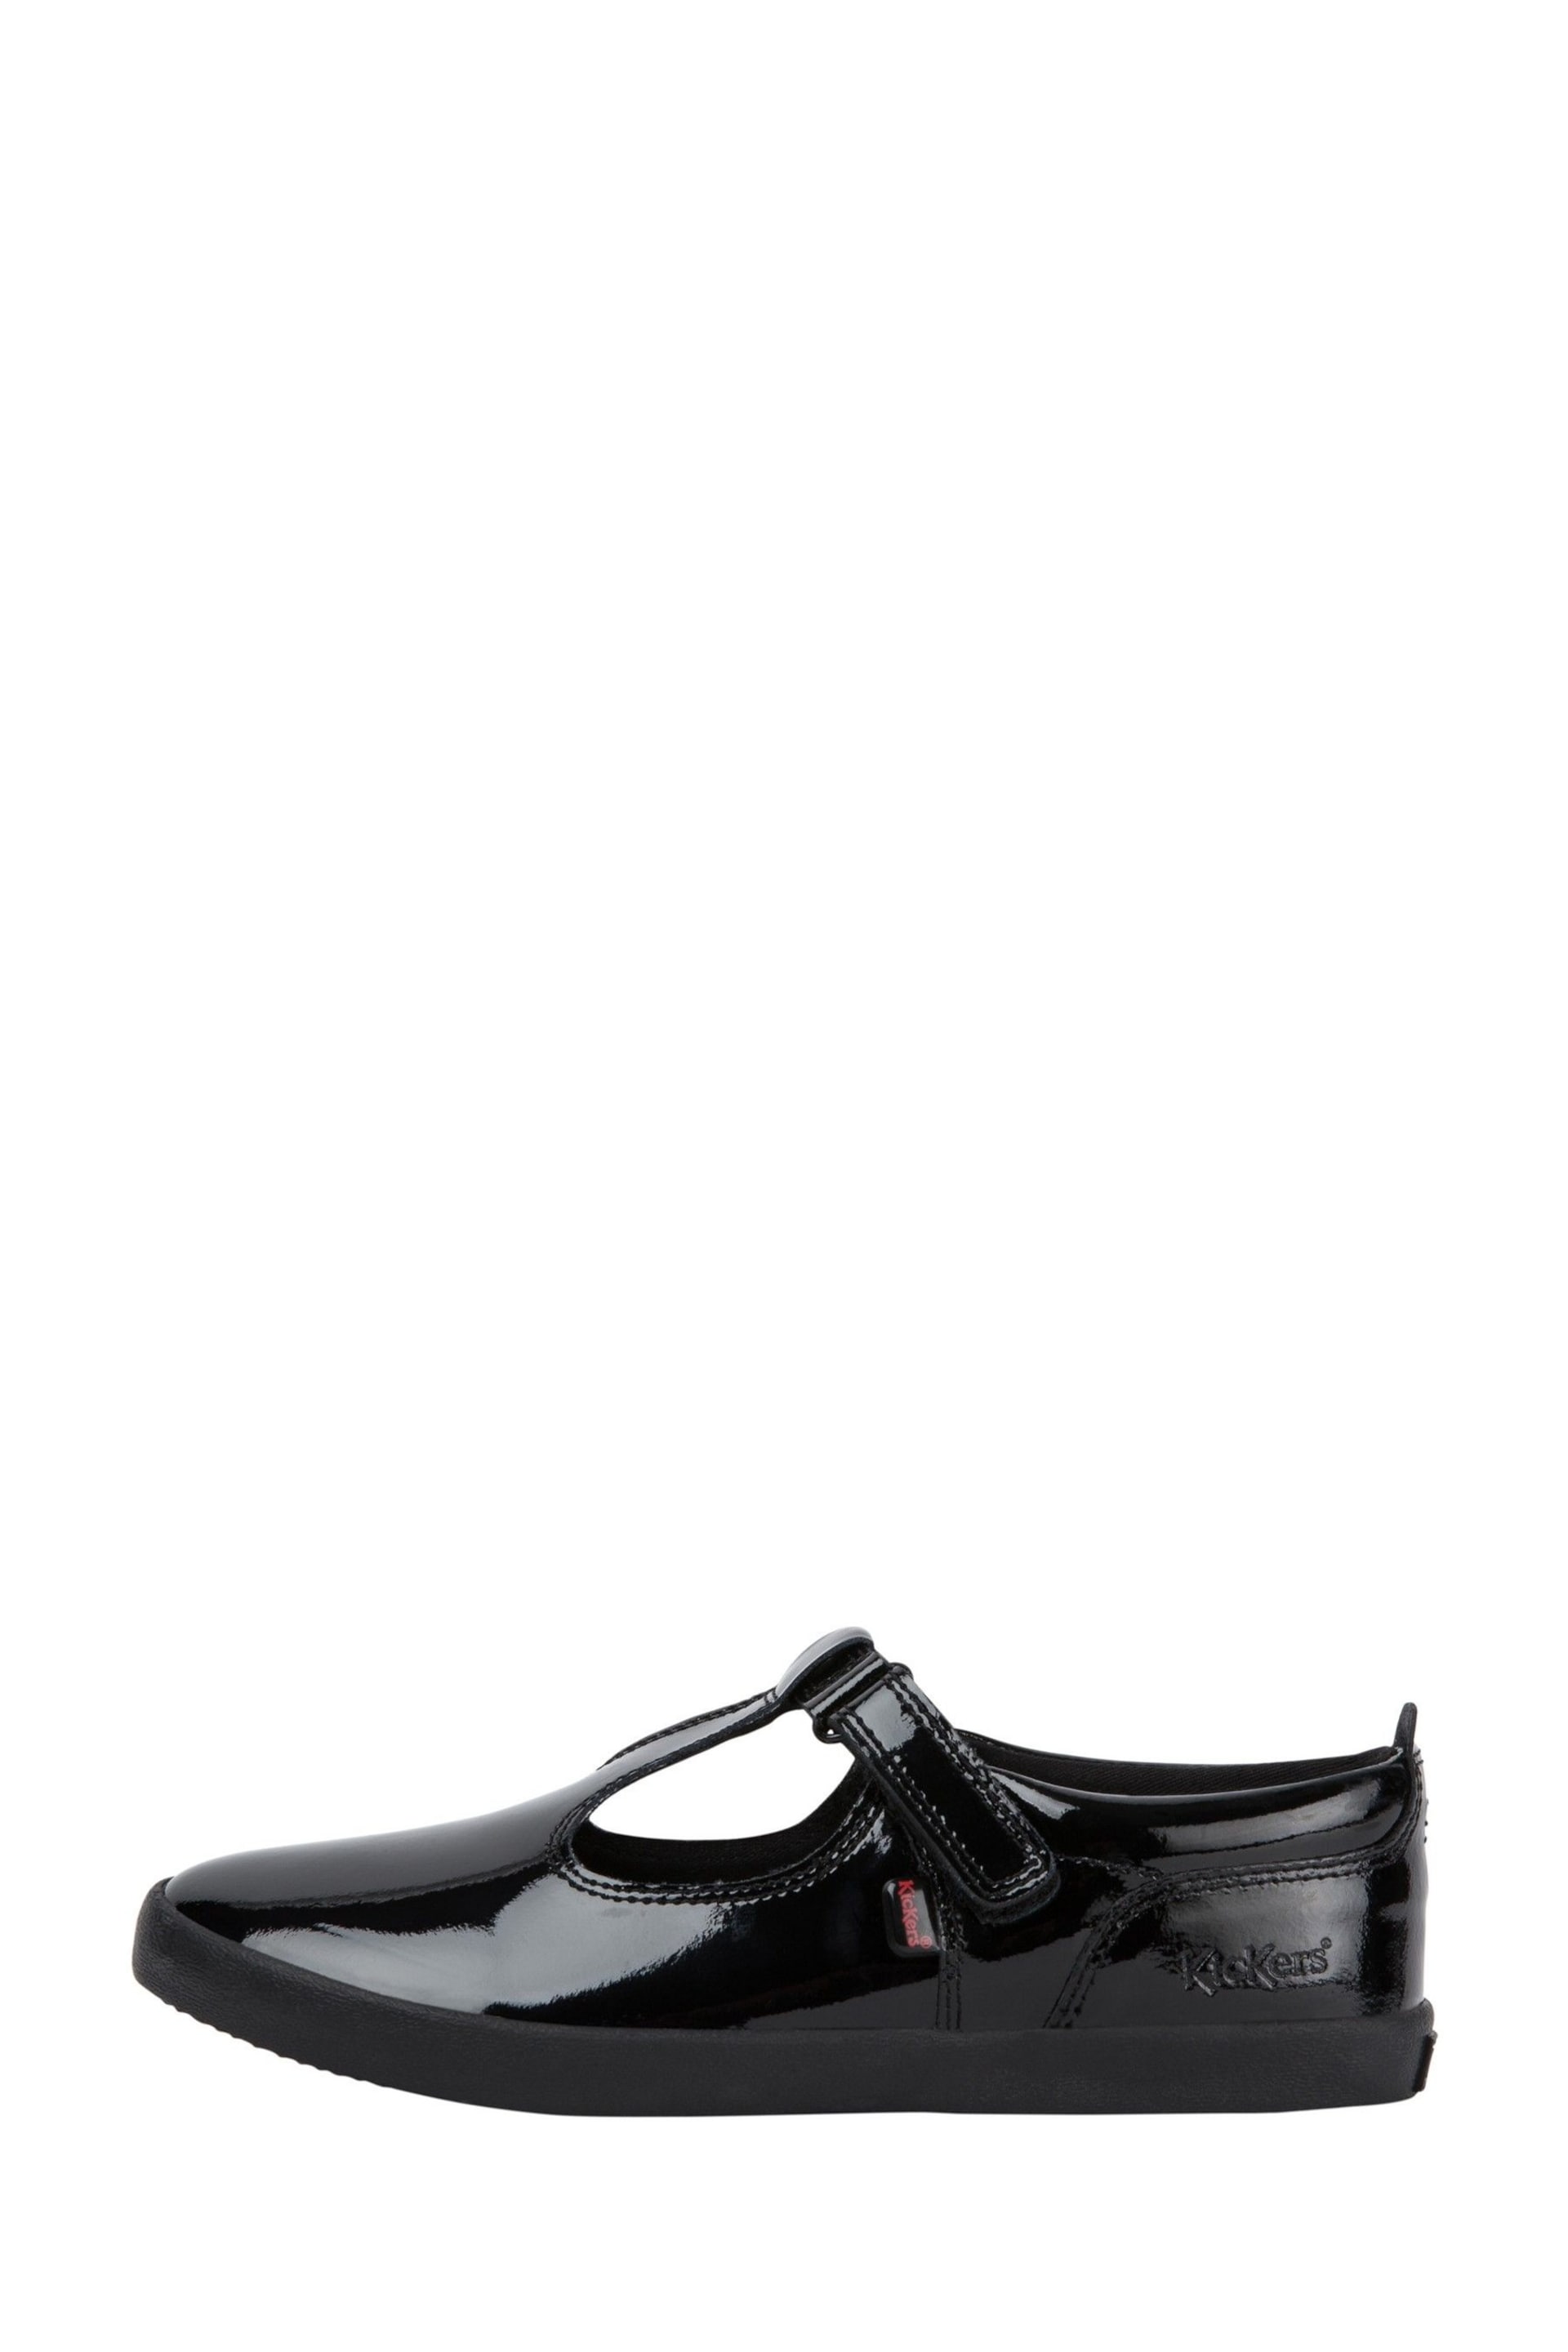 Kickers Junior Kariko T-Bar Hook and Loop Patent Leather Shoes - Image 1 of 5